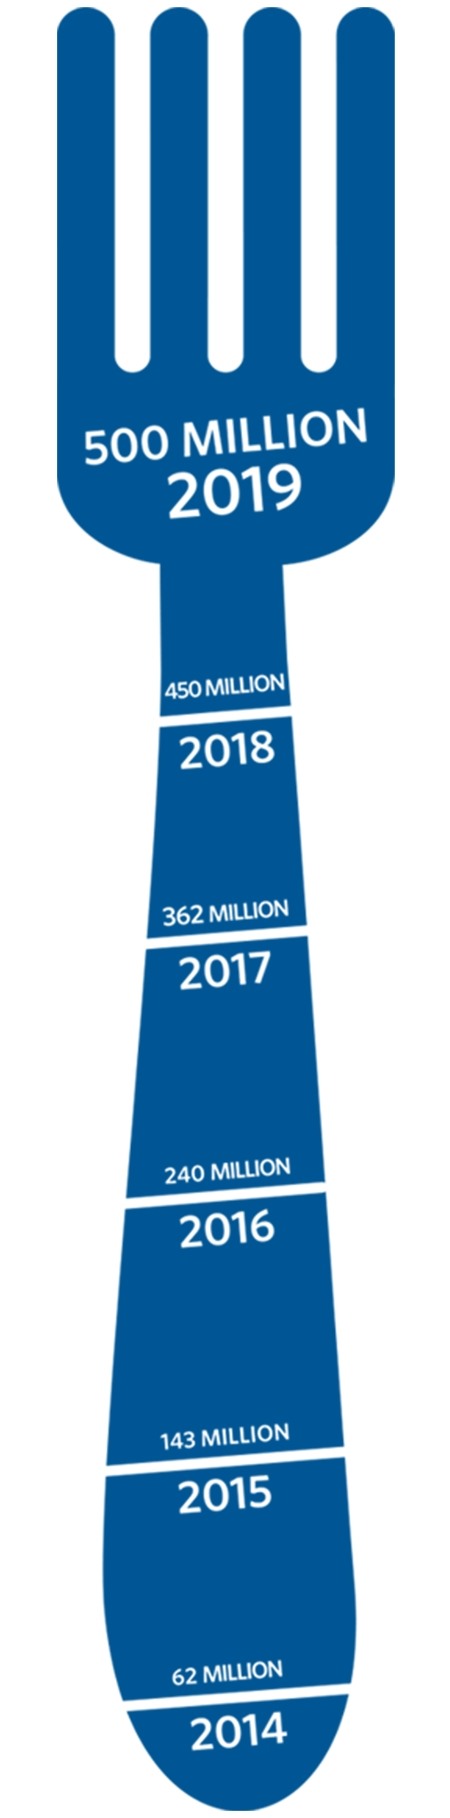 Our 500 Million Meal Goal Timeline